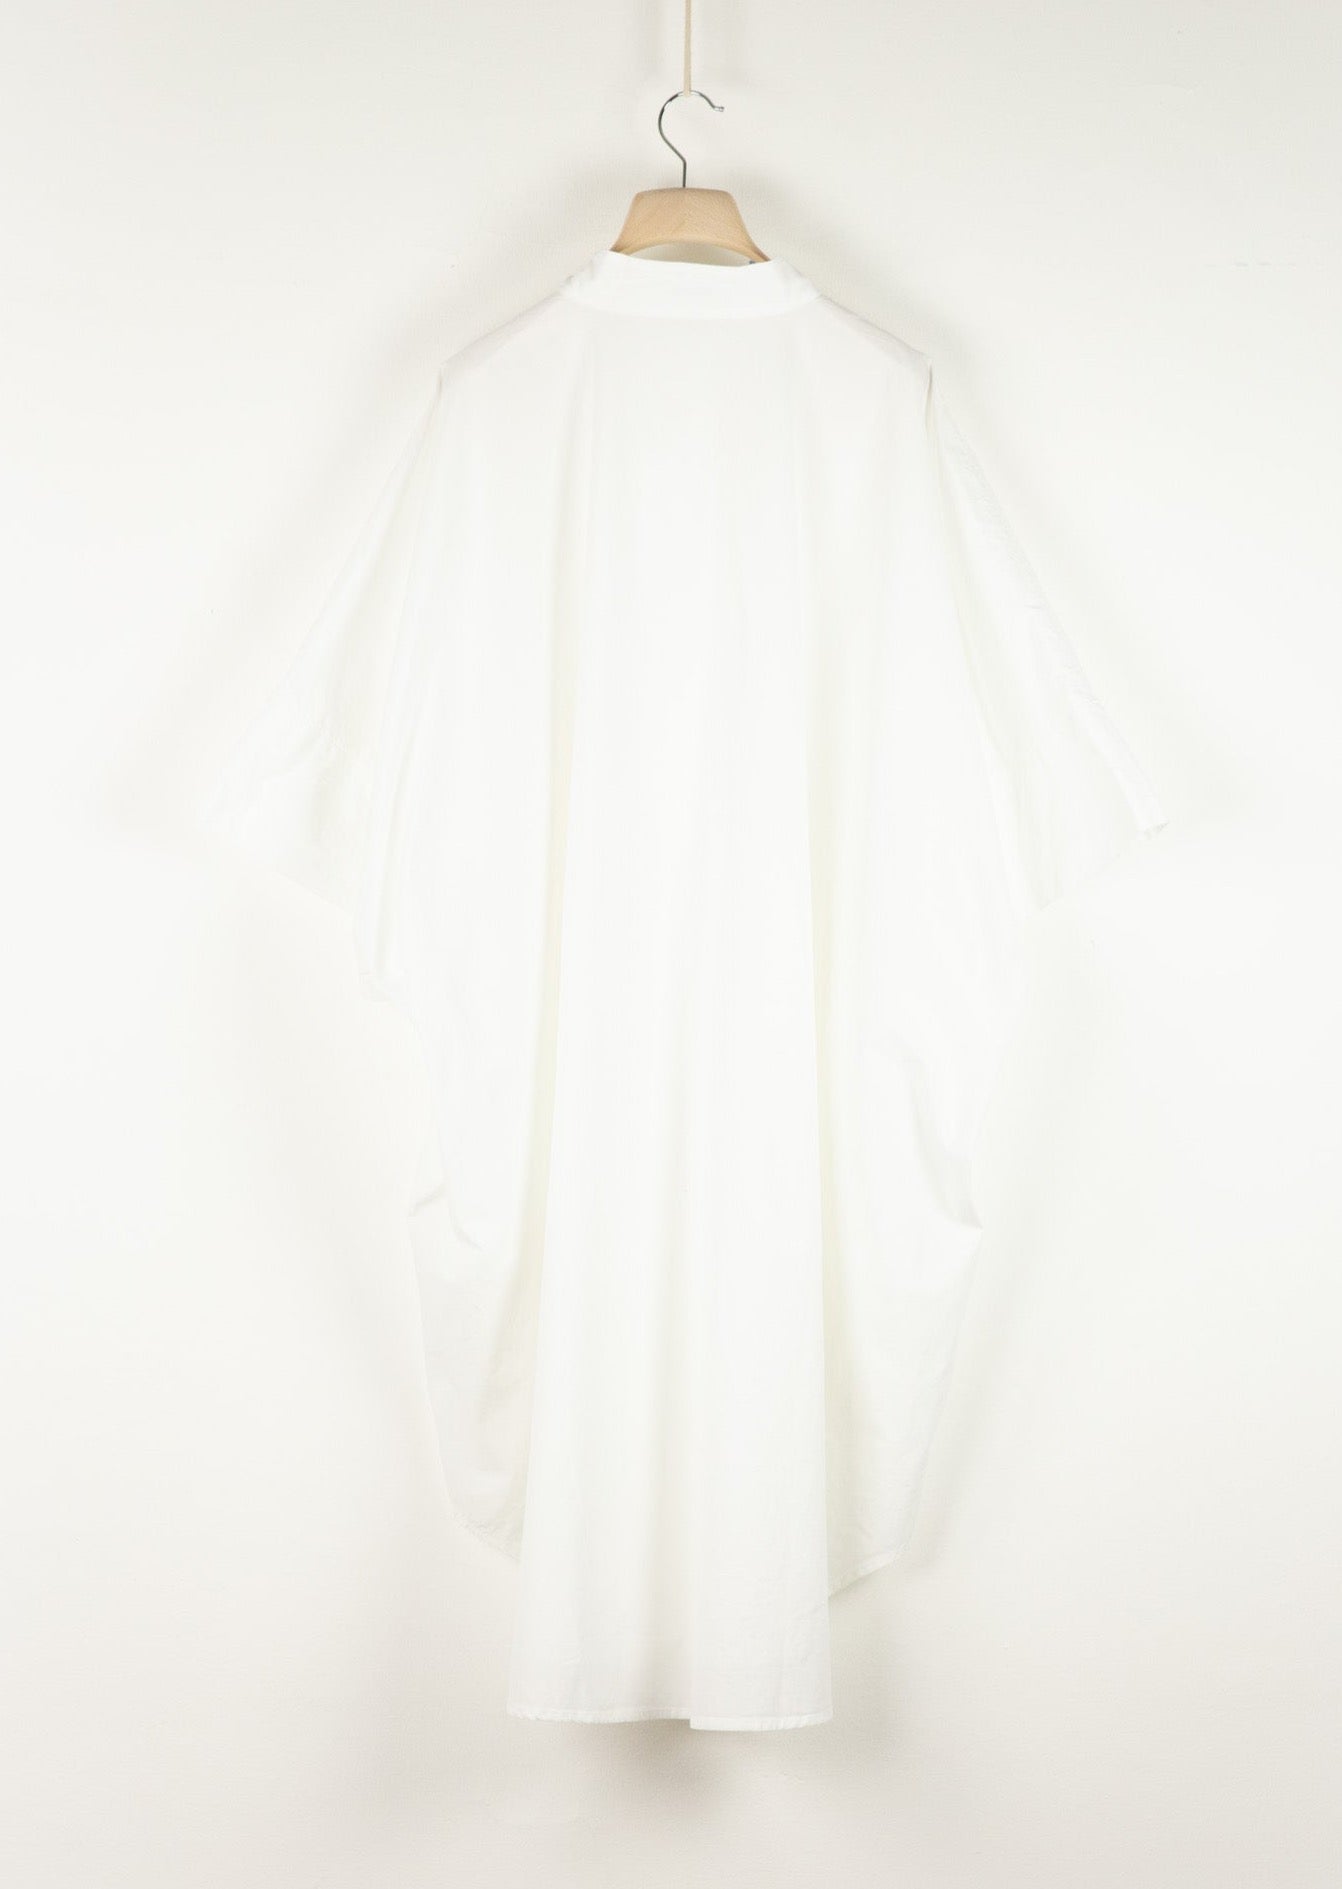 OCTO Overshirt | White Cotton | last one